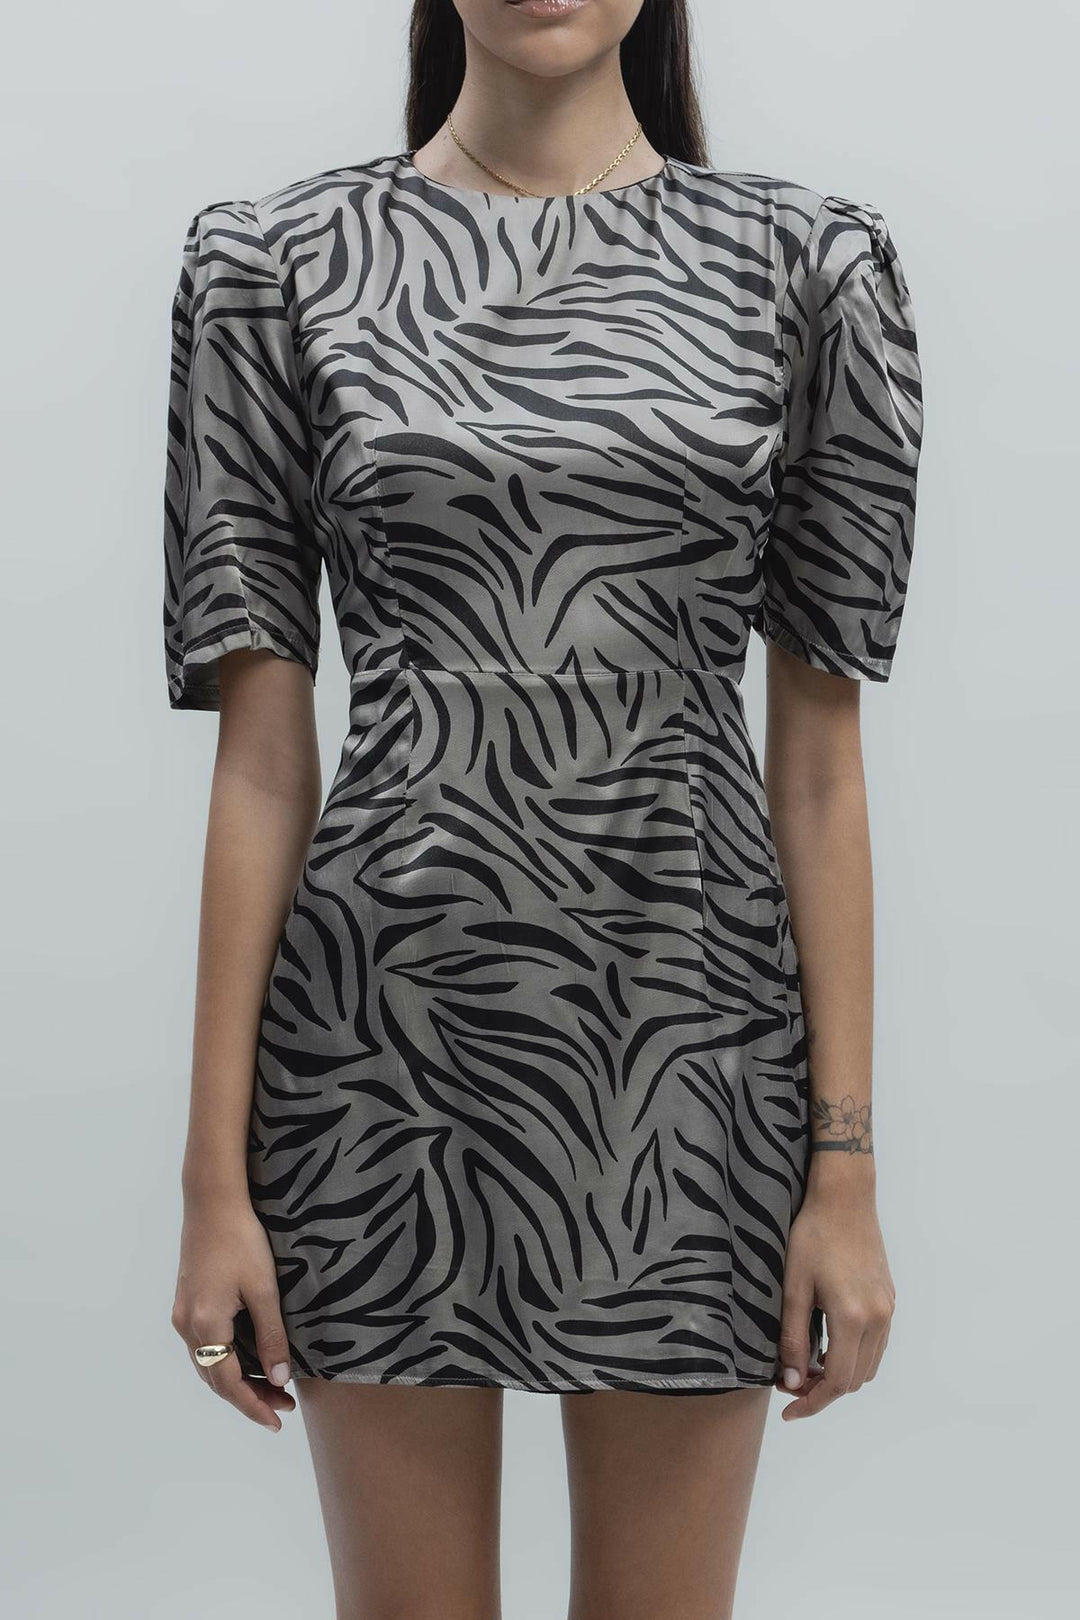 Satin Zebra Patterned Mini Dress